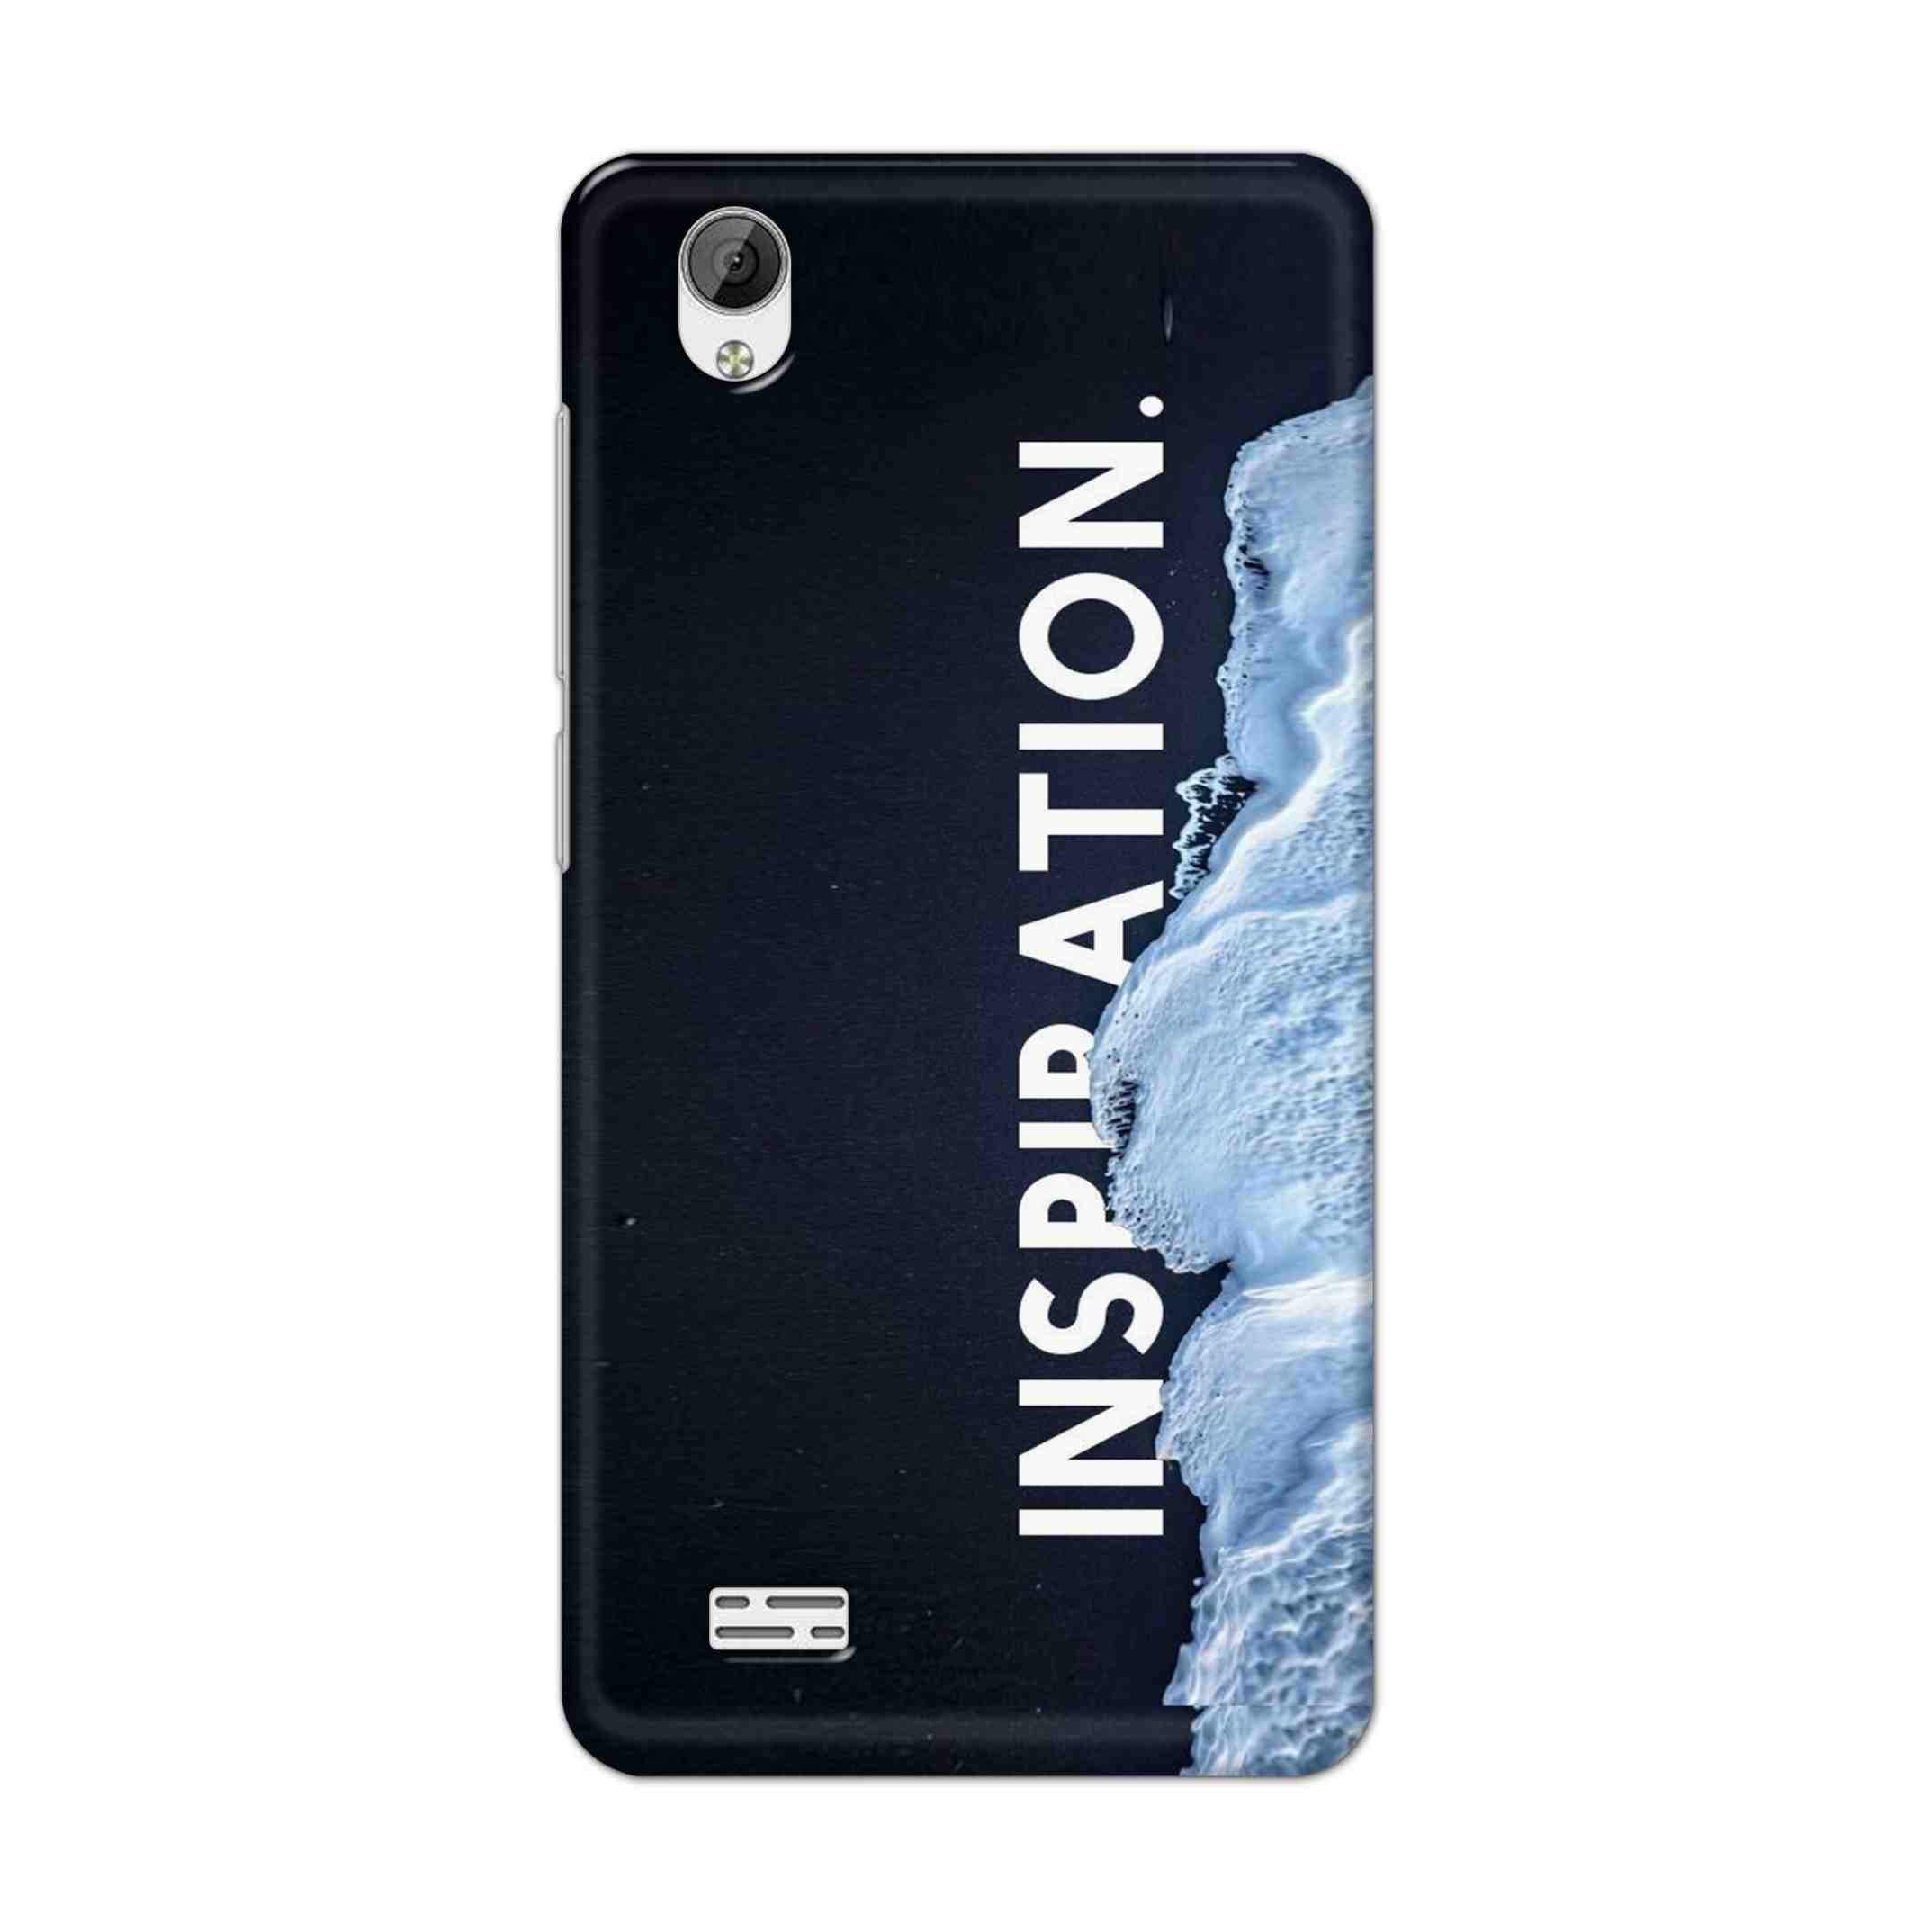 Buy Inspiration Hard Back Mobile Phone Case Cover For Vivo Y31 Online